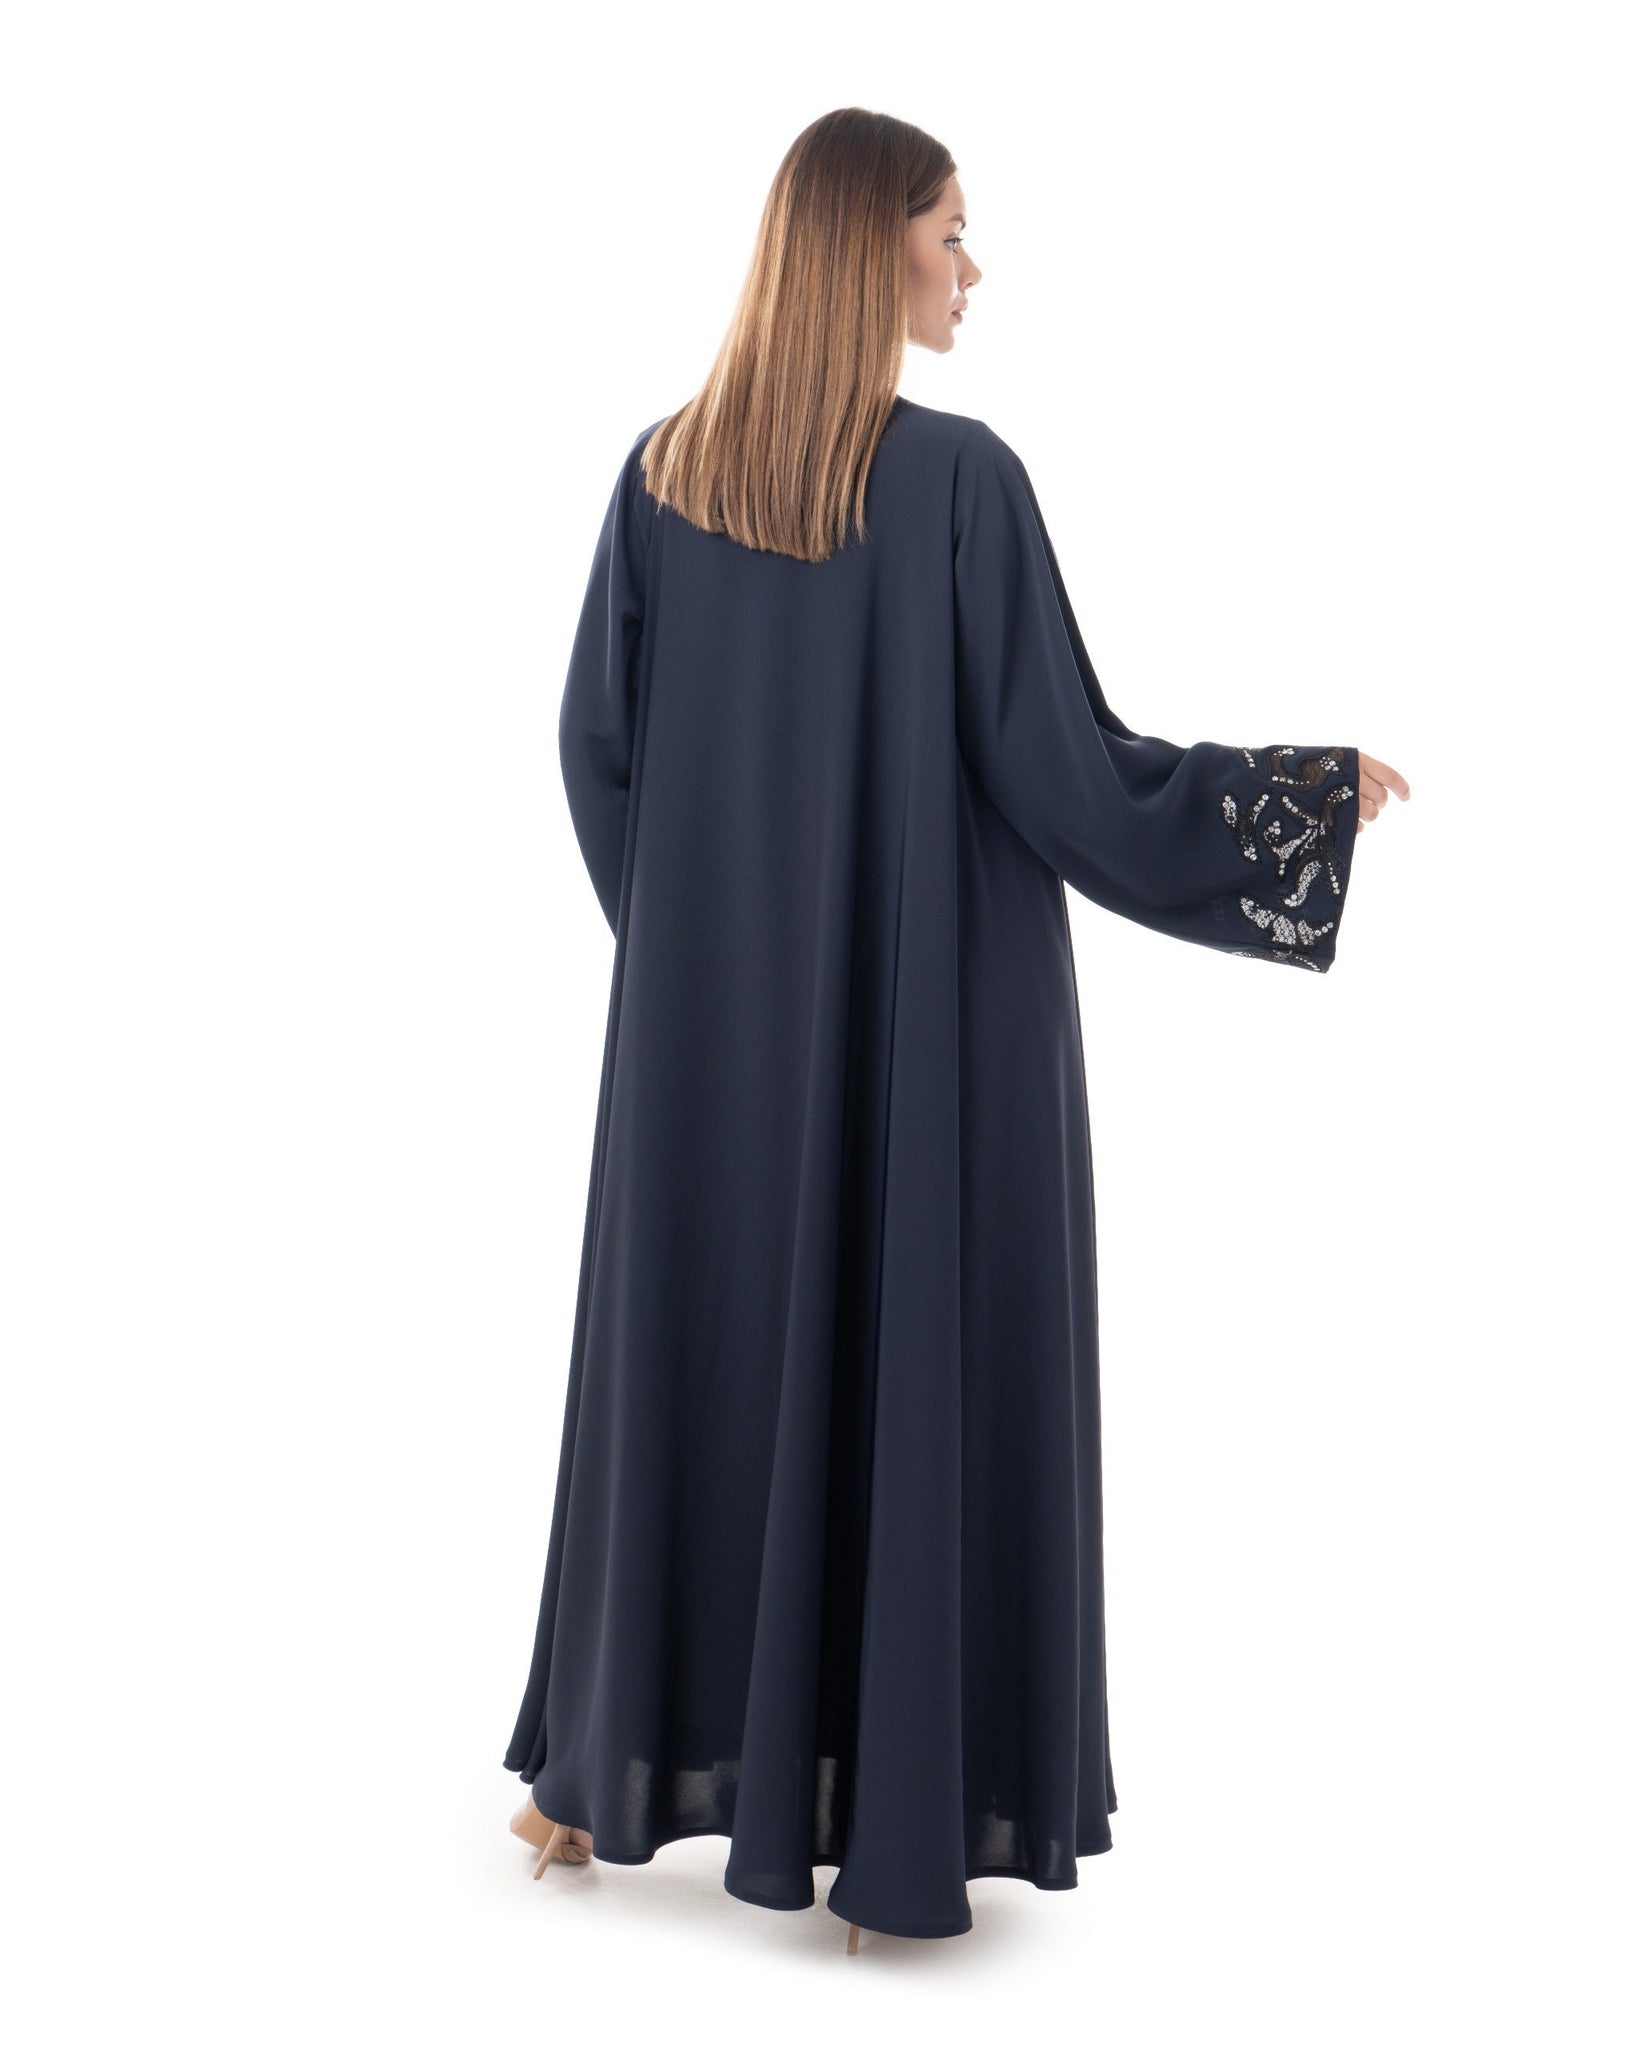 Hanayen Exquisite Navy Blue Abaya With Lace Detailing